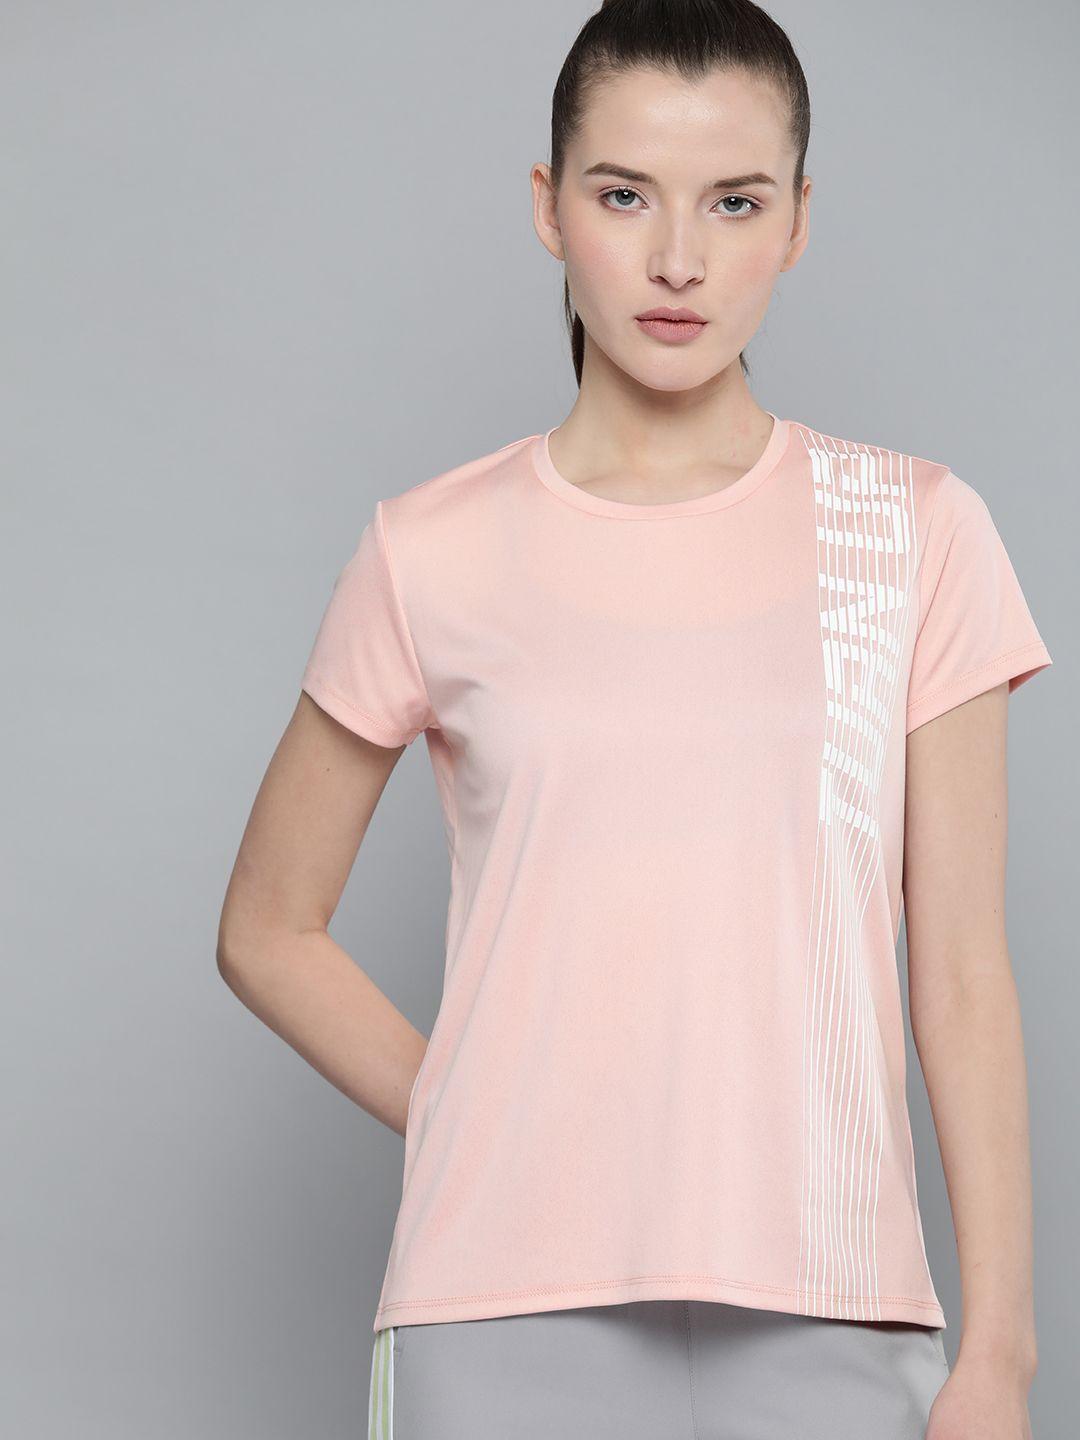 hrx by hrithik roshan peach-coloured placement print rapid-dry training t-shirt